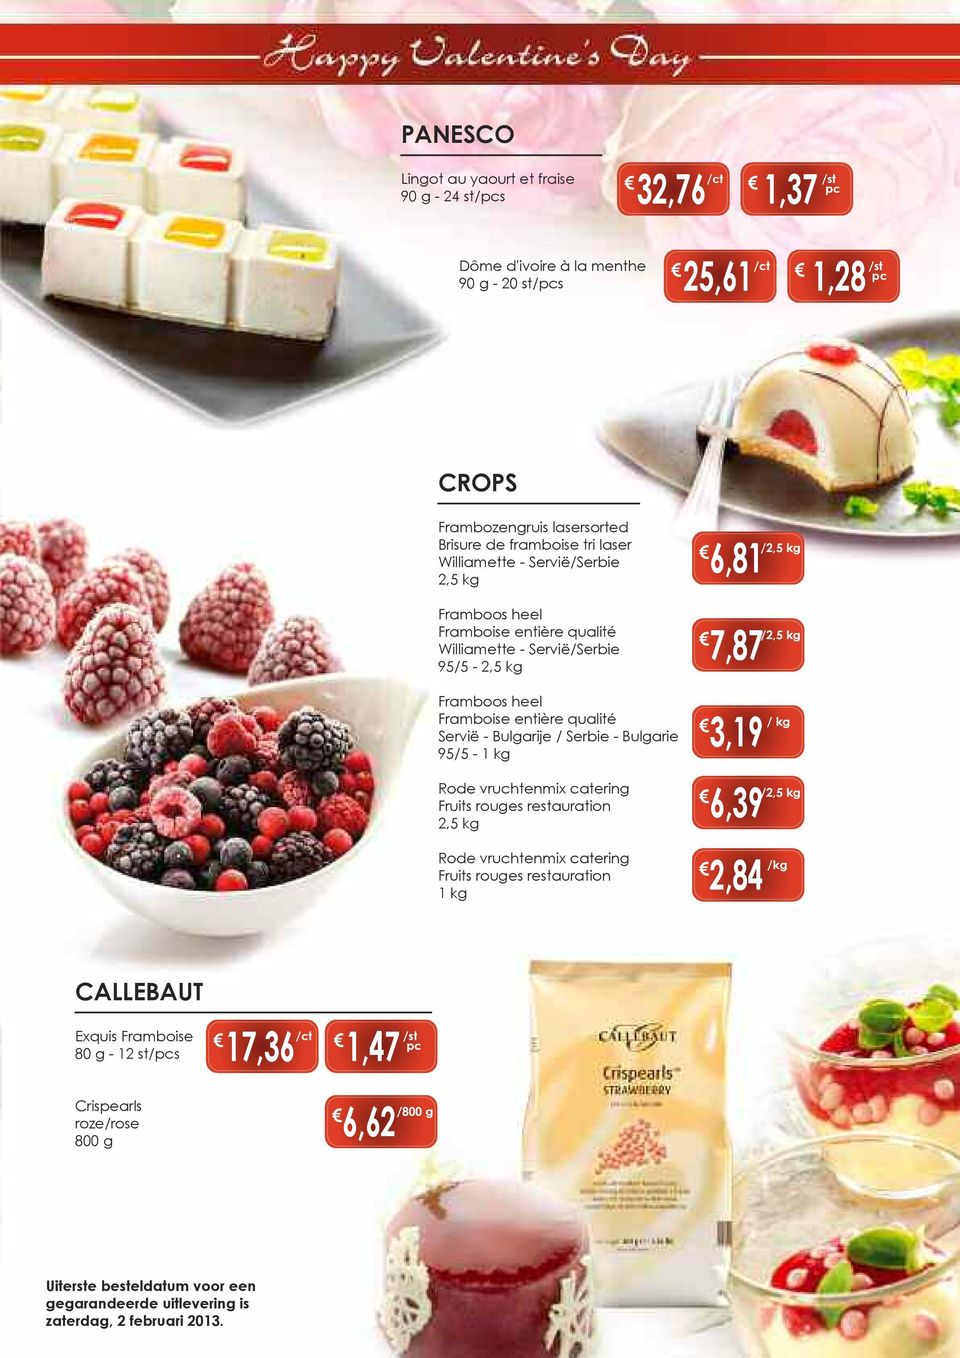 / Serbie - Bulgarie 95/5-1 kg Rode vruchtenmix catering Fruits rouges restauration 2,5 kg Rode vruchtenmix catering Fruits rouges restauration 1 kg 6,81 7,87 3,19 / kg 6,39 2,84 /kg